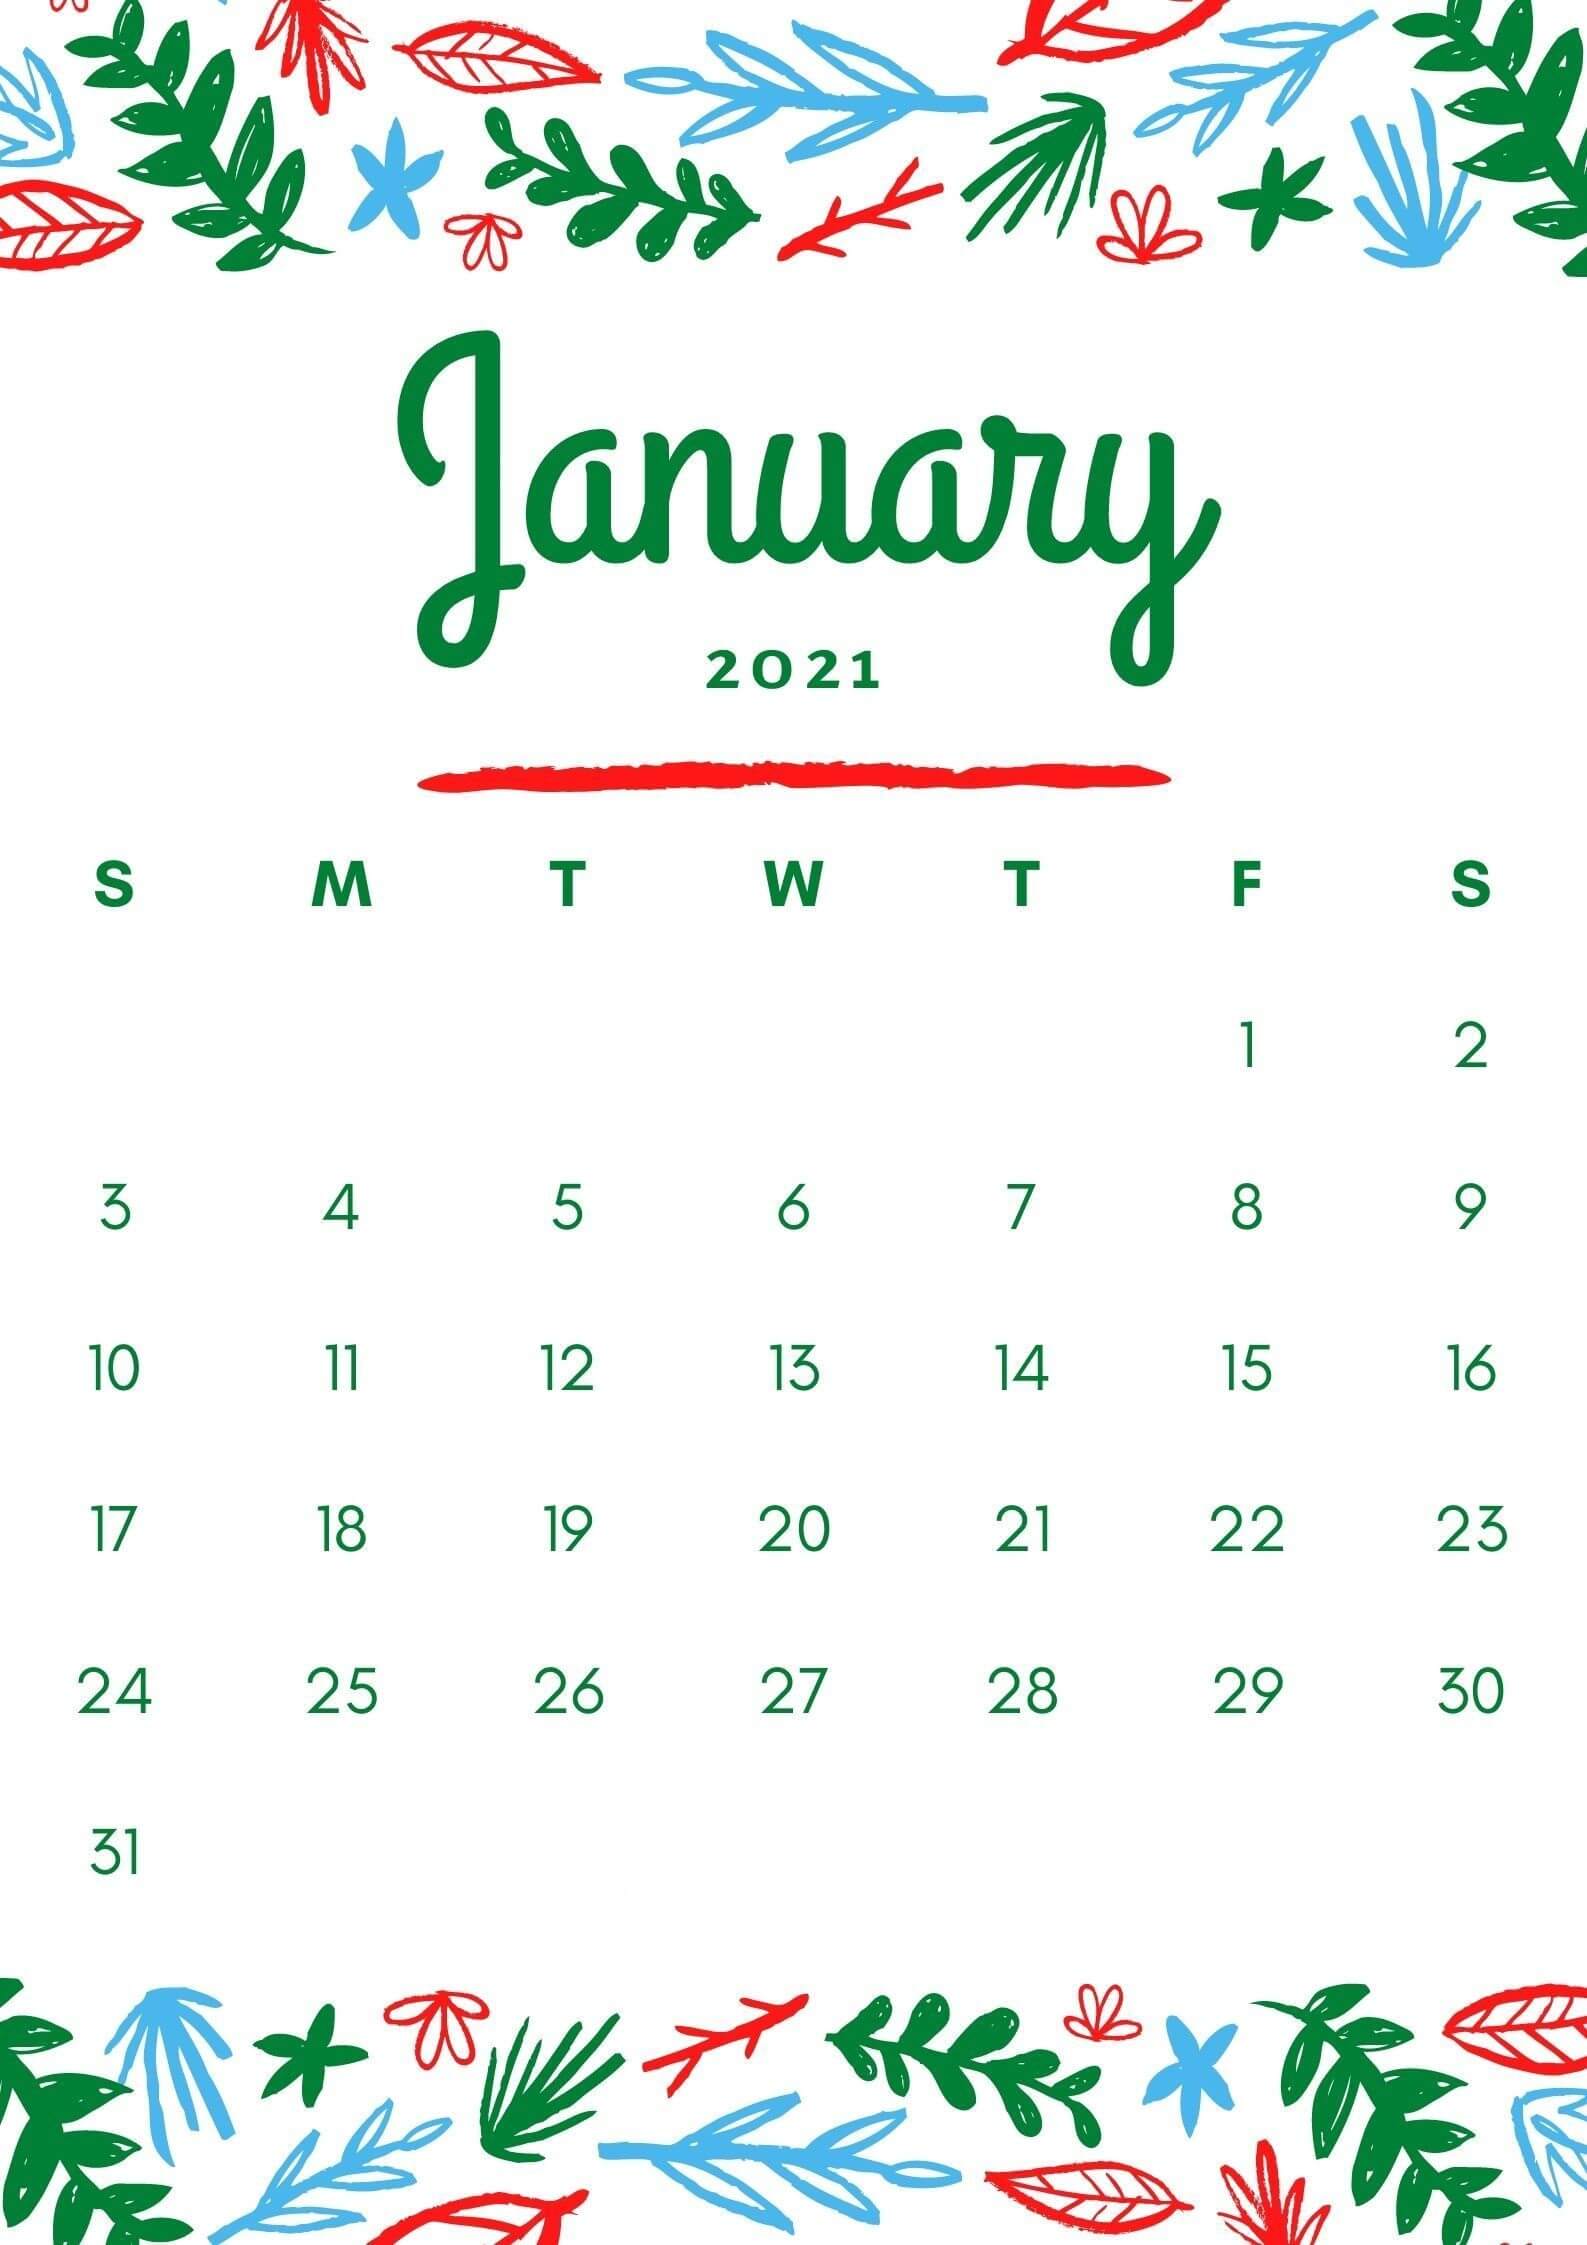 January 2021 Calendar Iphone Wallpaper Image ID 13